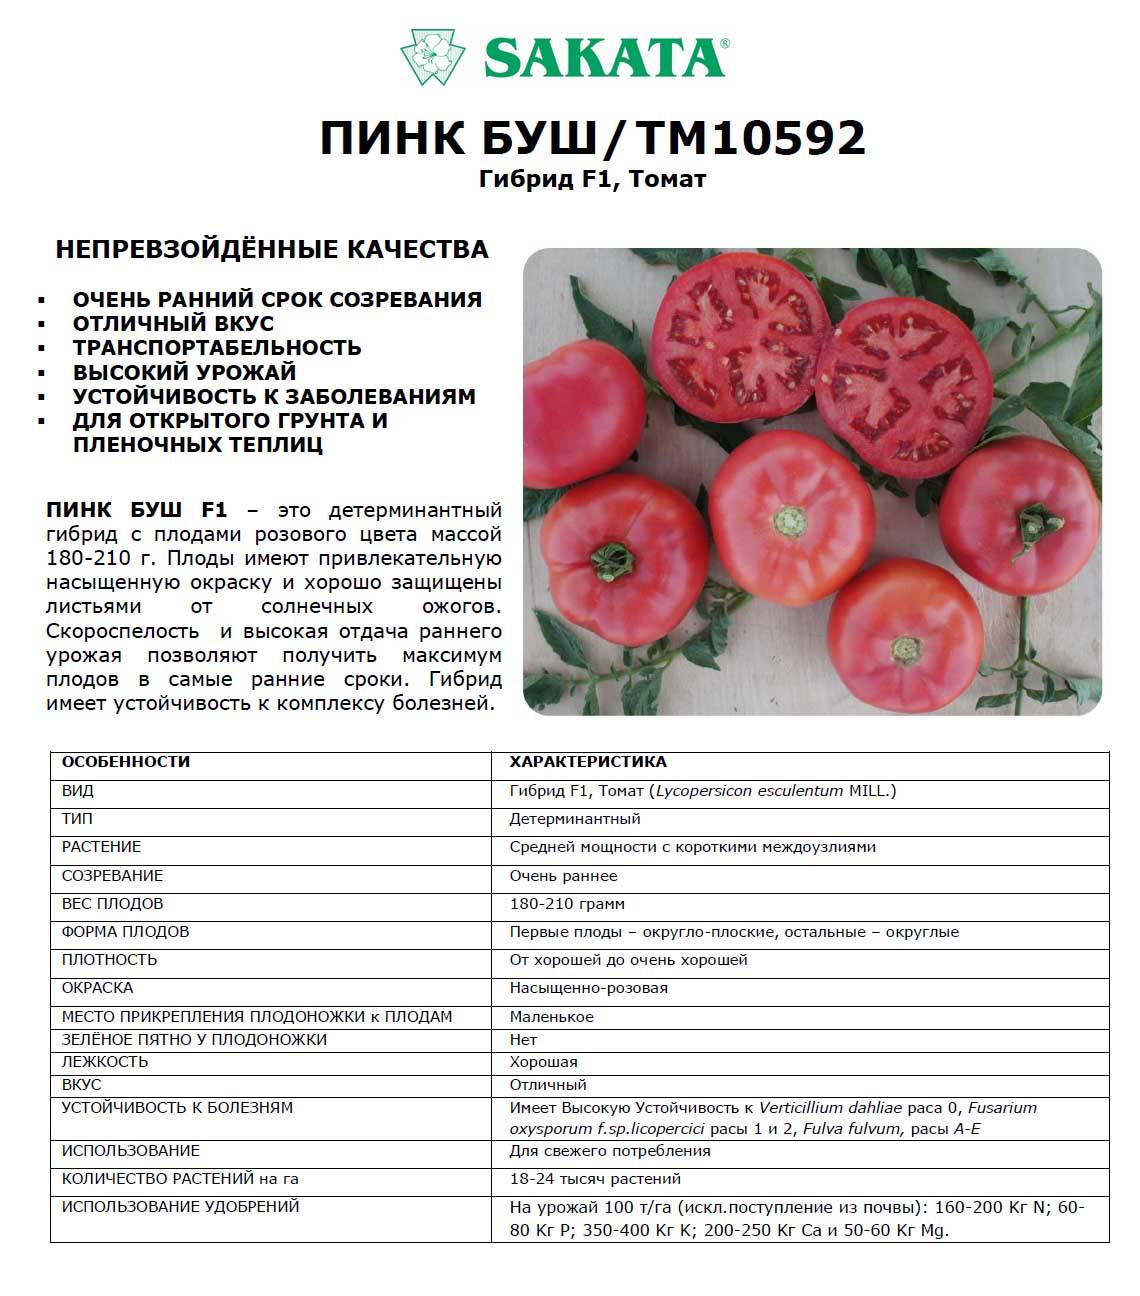 Томат пинк райз f1: отзывы и фото куста, характеристика и описание сорта помидоров